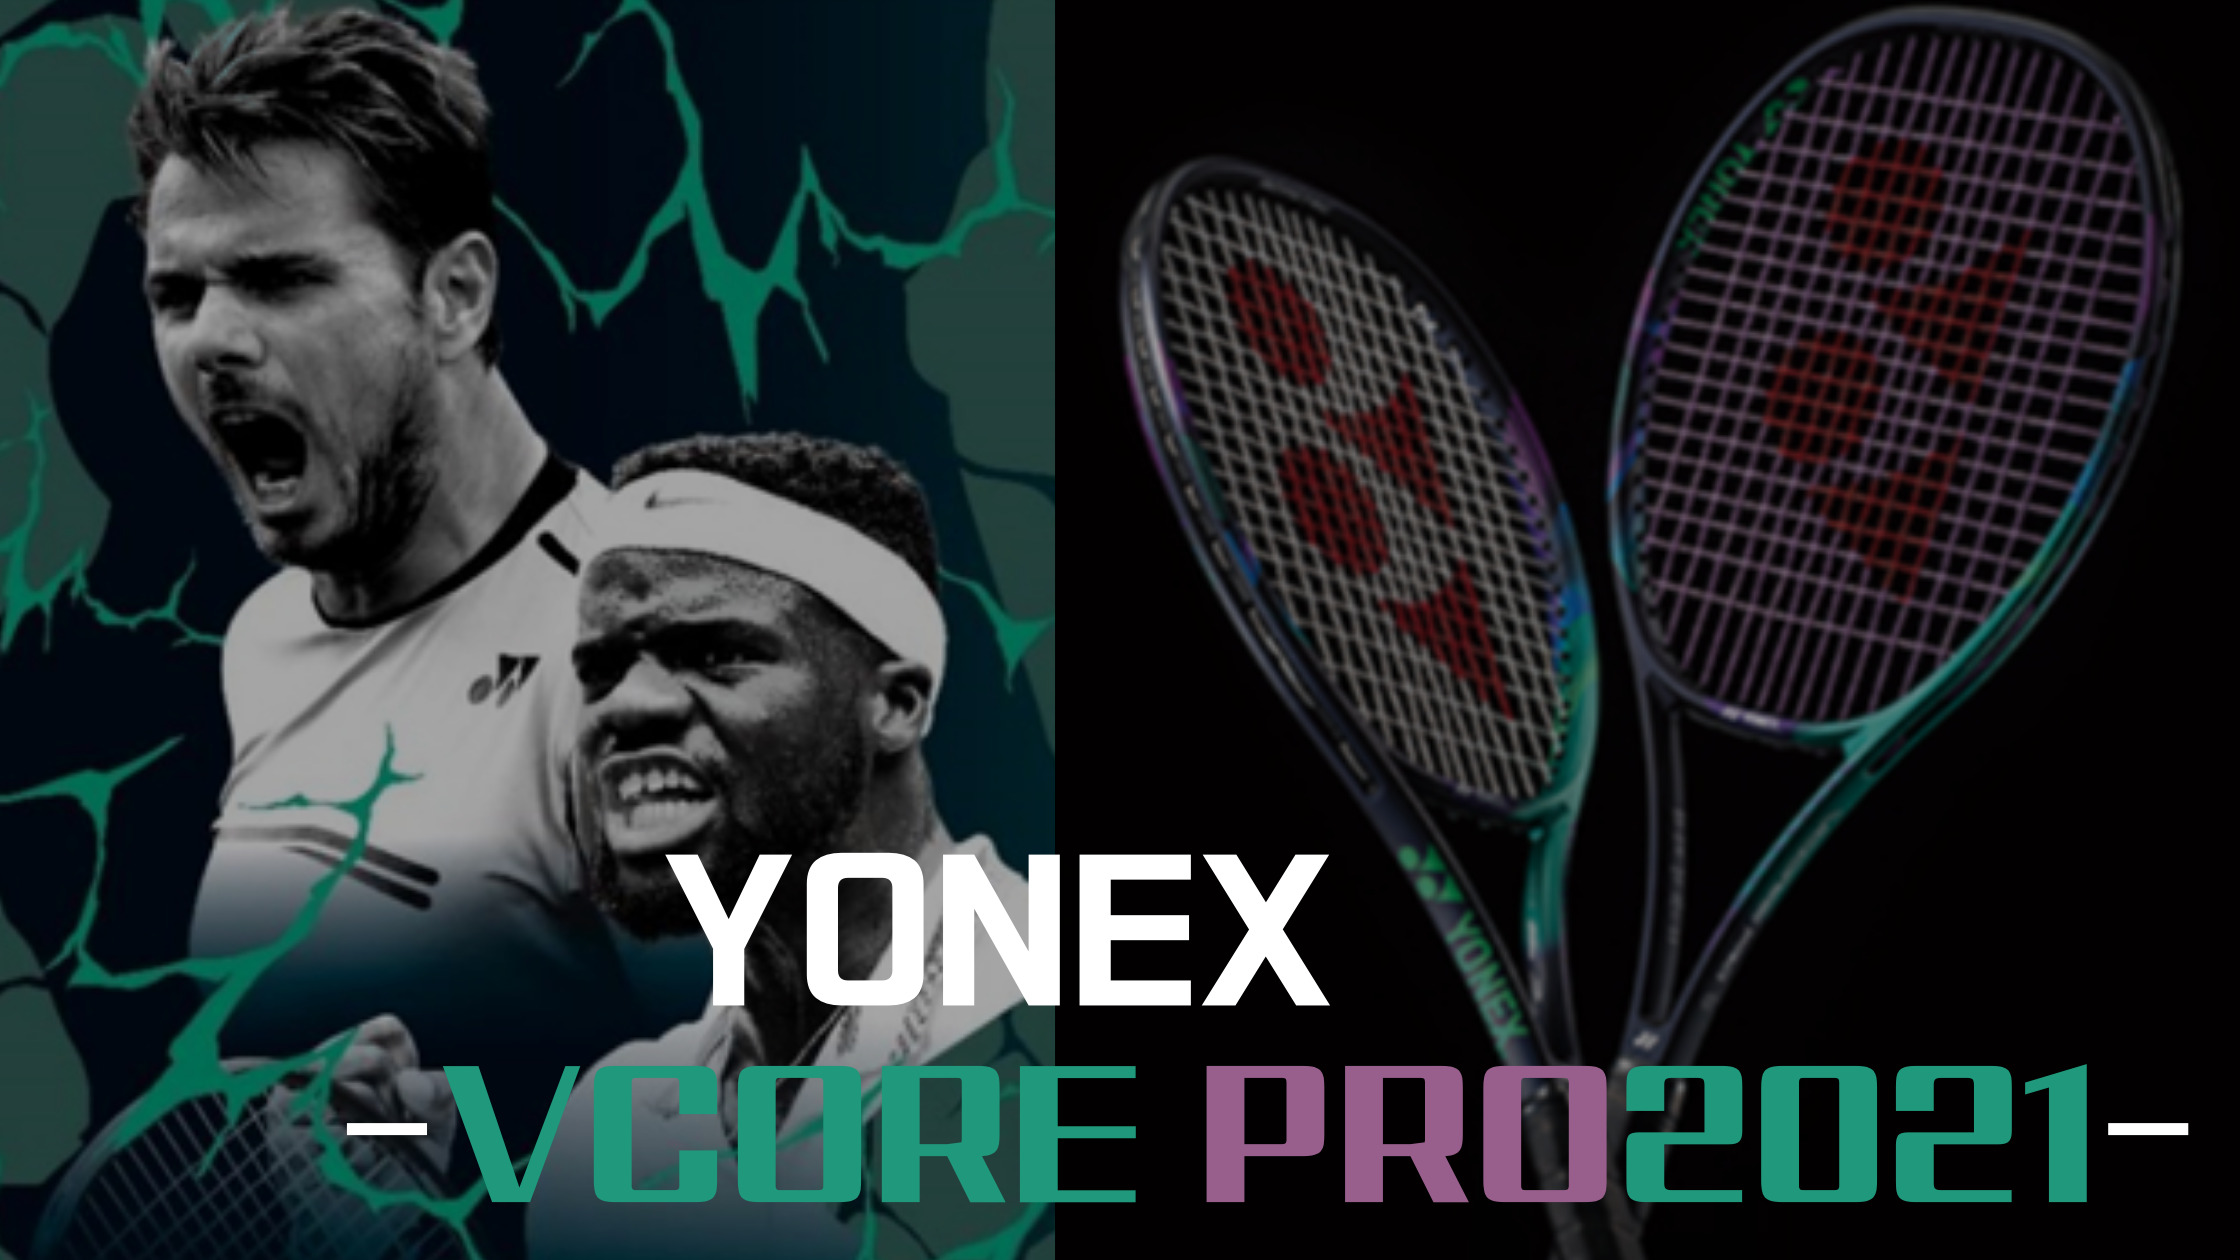 YONEX】VCORE PRO 2021の最新情報とスペックまとめ【新作】 | たつじんblog